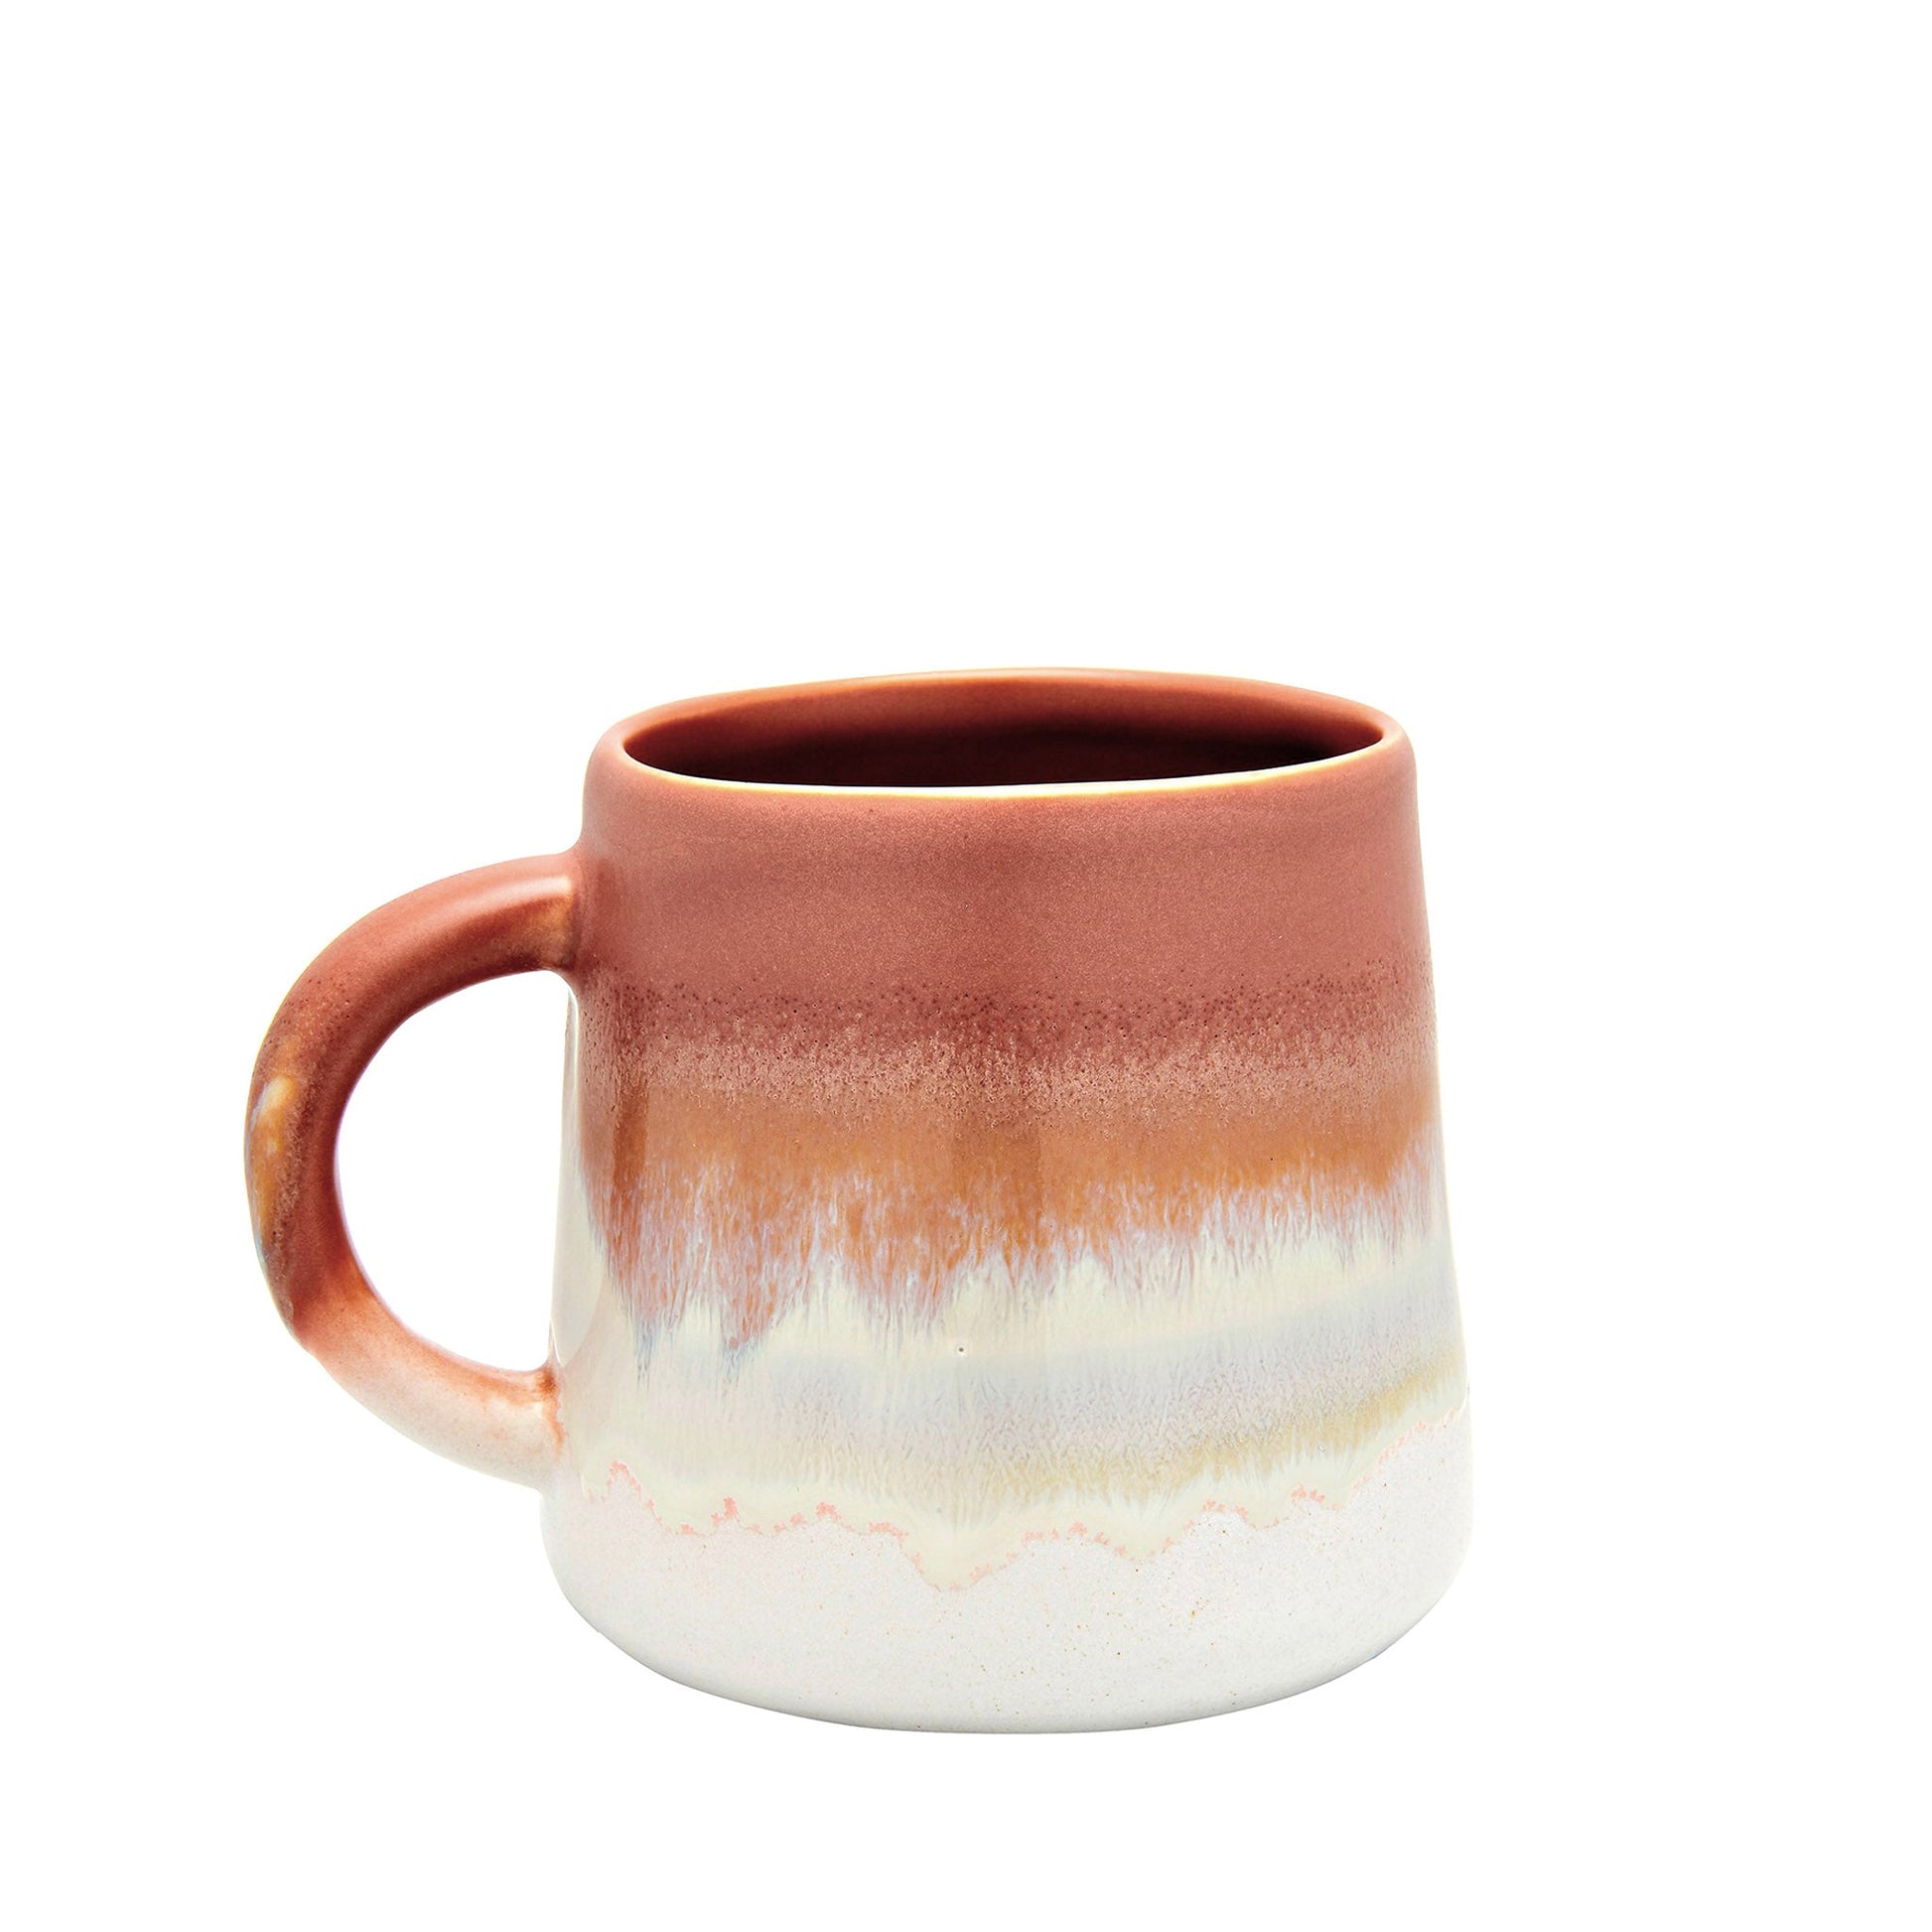 Mojave glasierte Tasse aus Steingut - Terrakotta - Vandeley